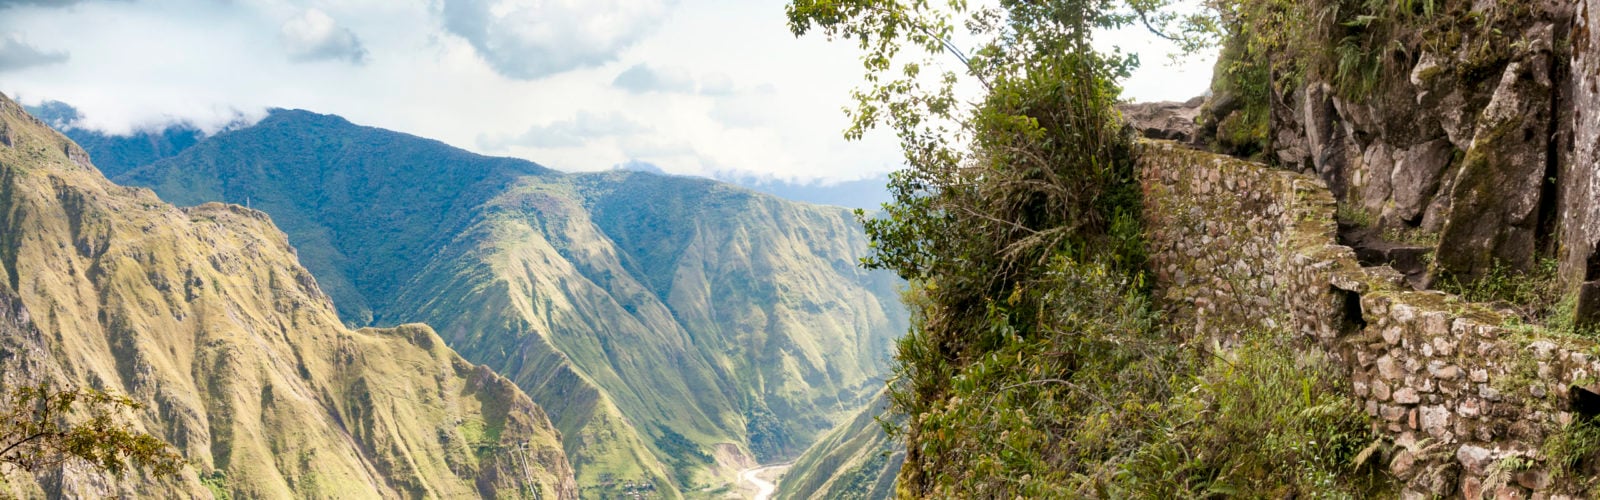 Mountain pass Machu Picchu Peru